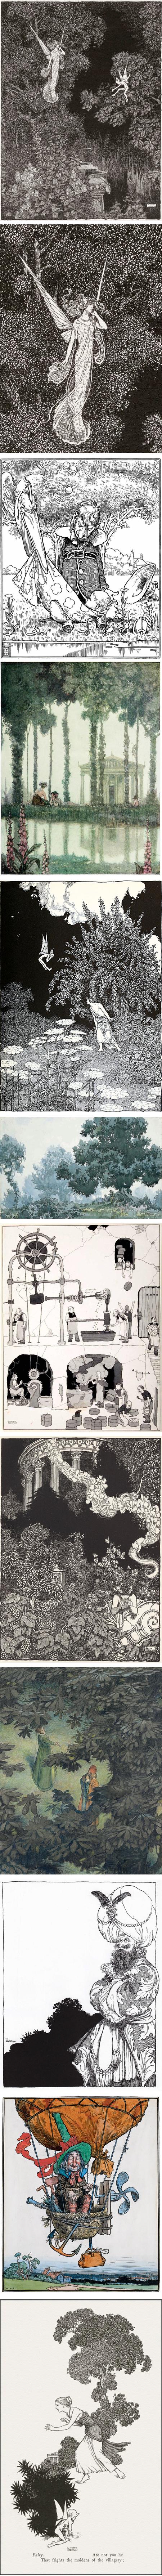 W. Heath Robinson, illustrations, cartoons, contraptions, watercolors